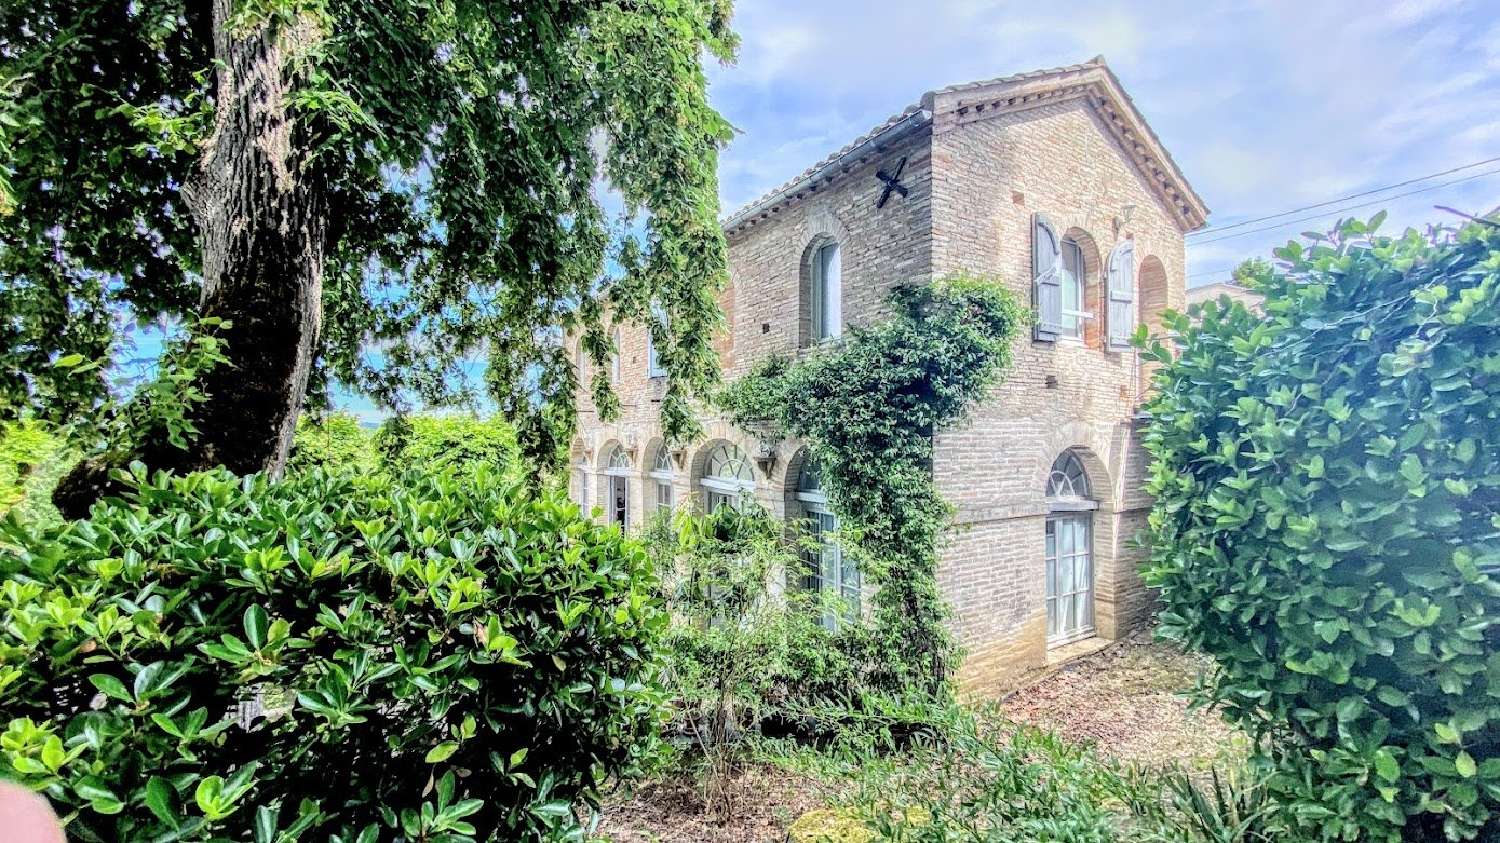  à vendre maison bourgeoise Montauban Tarn-et-Garonne 2